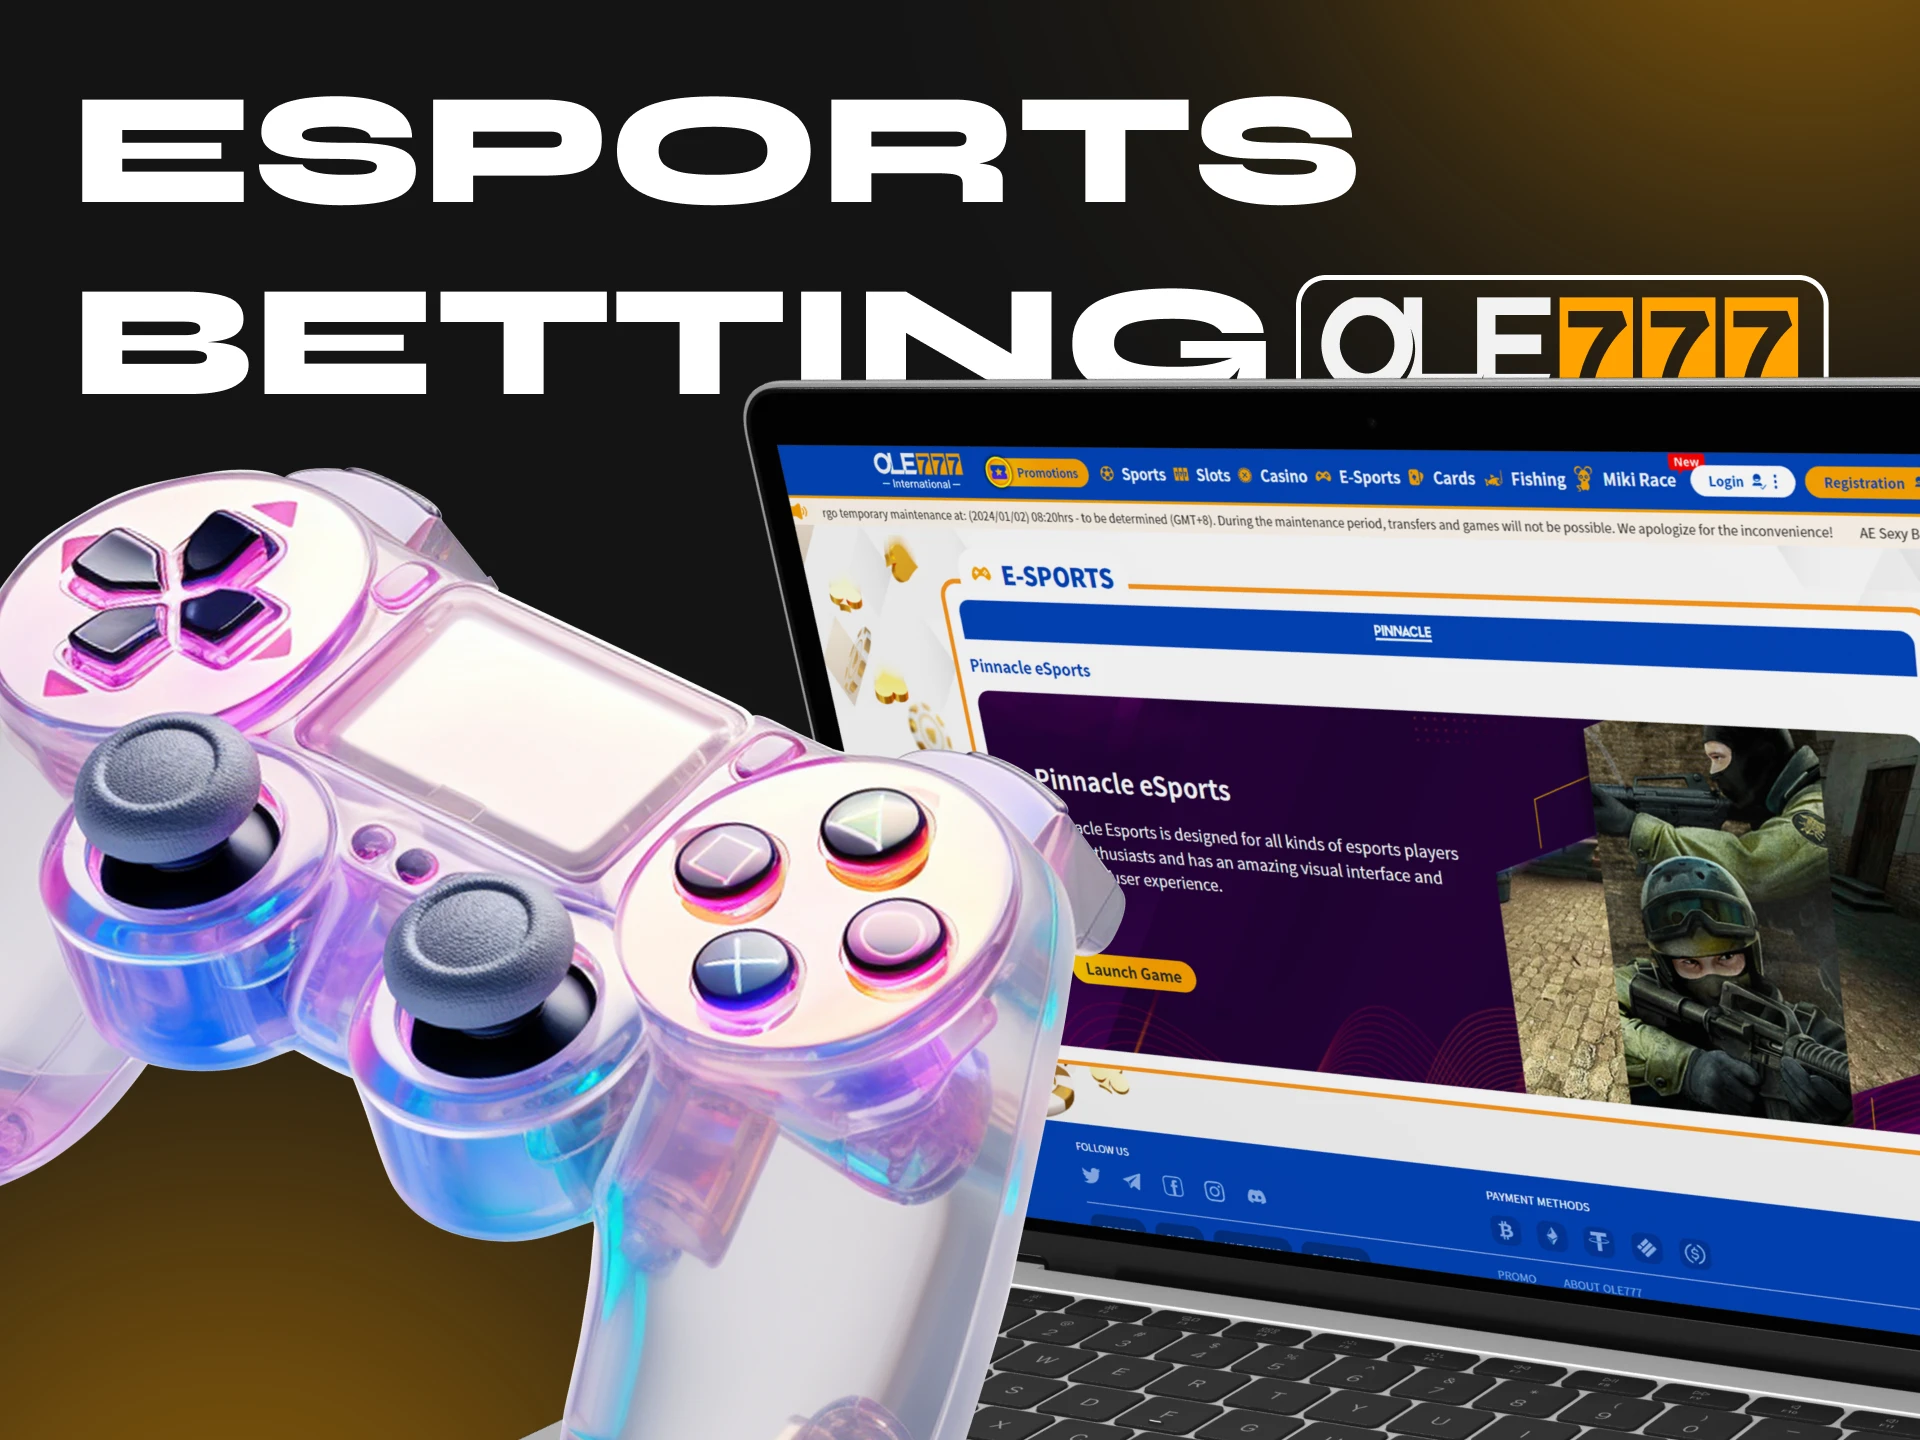 Bet on eSports at Ole777 Casino using the Pinnacle eSports platform.